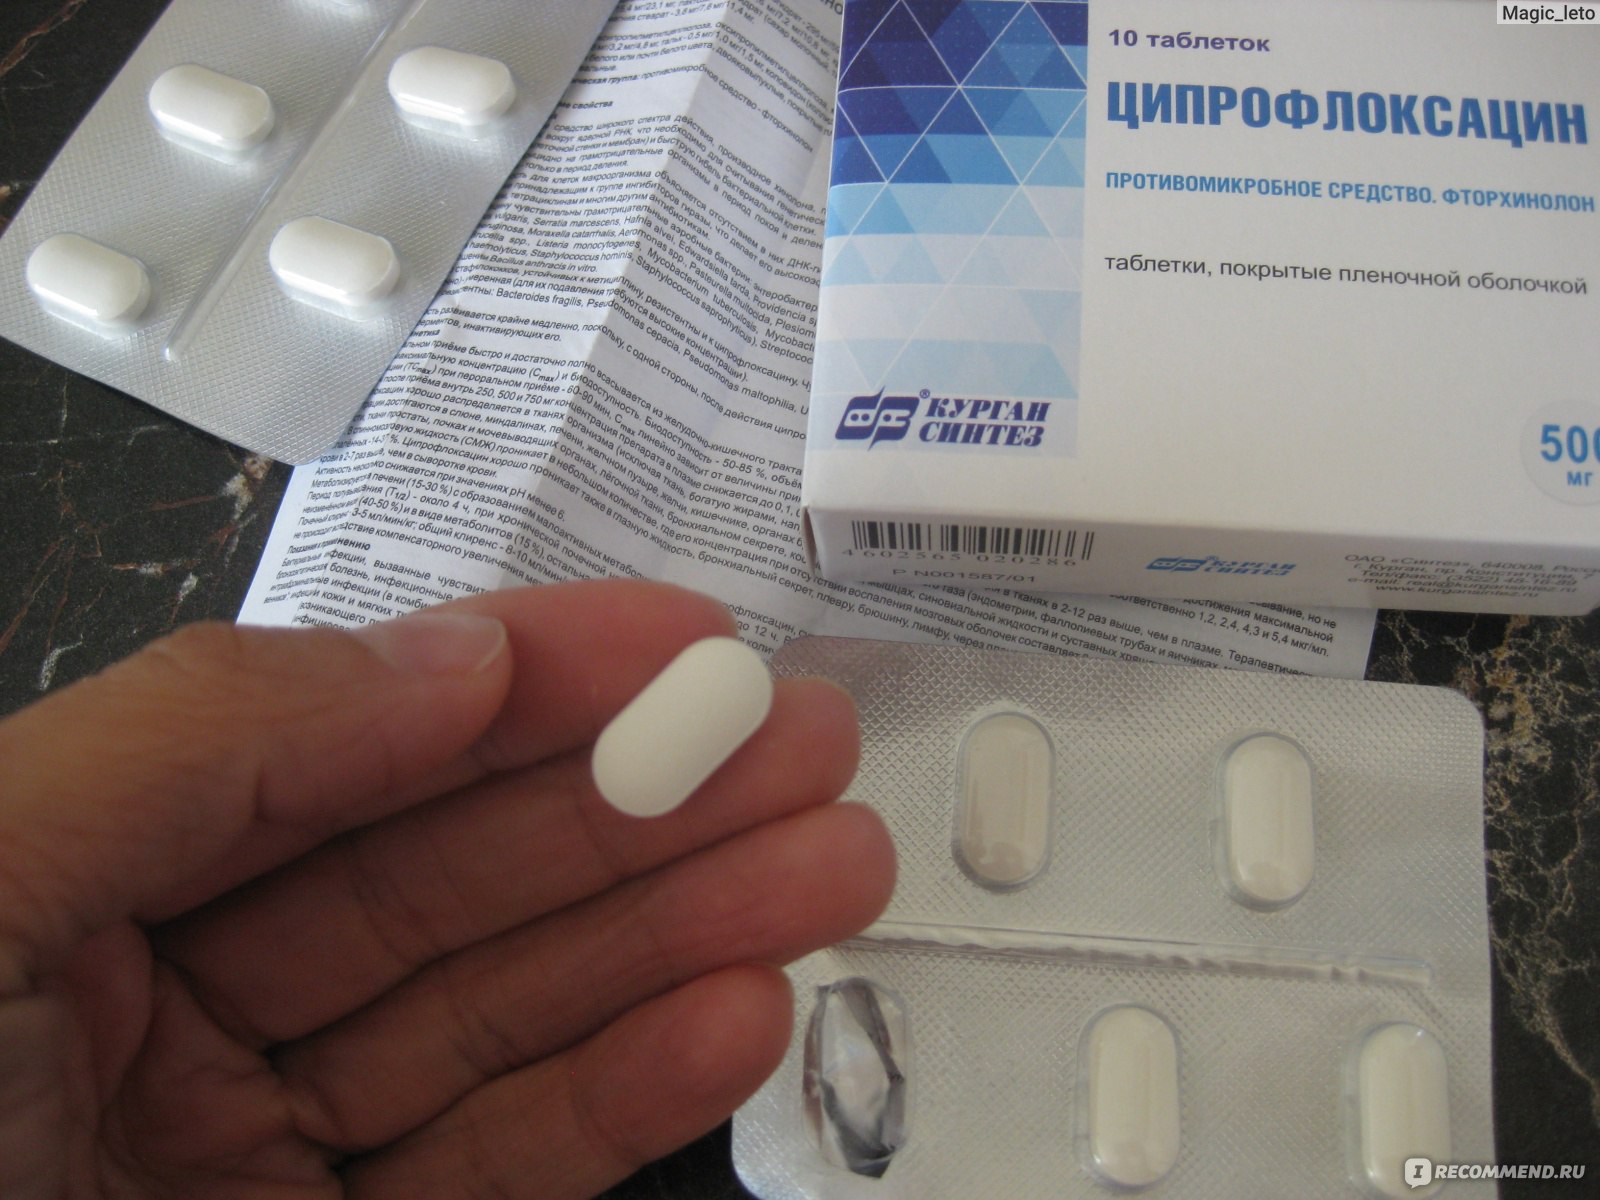 Антибиотики в таблетках недорогие